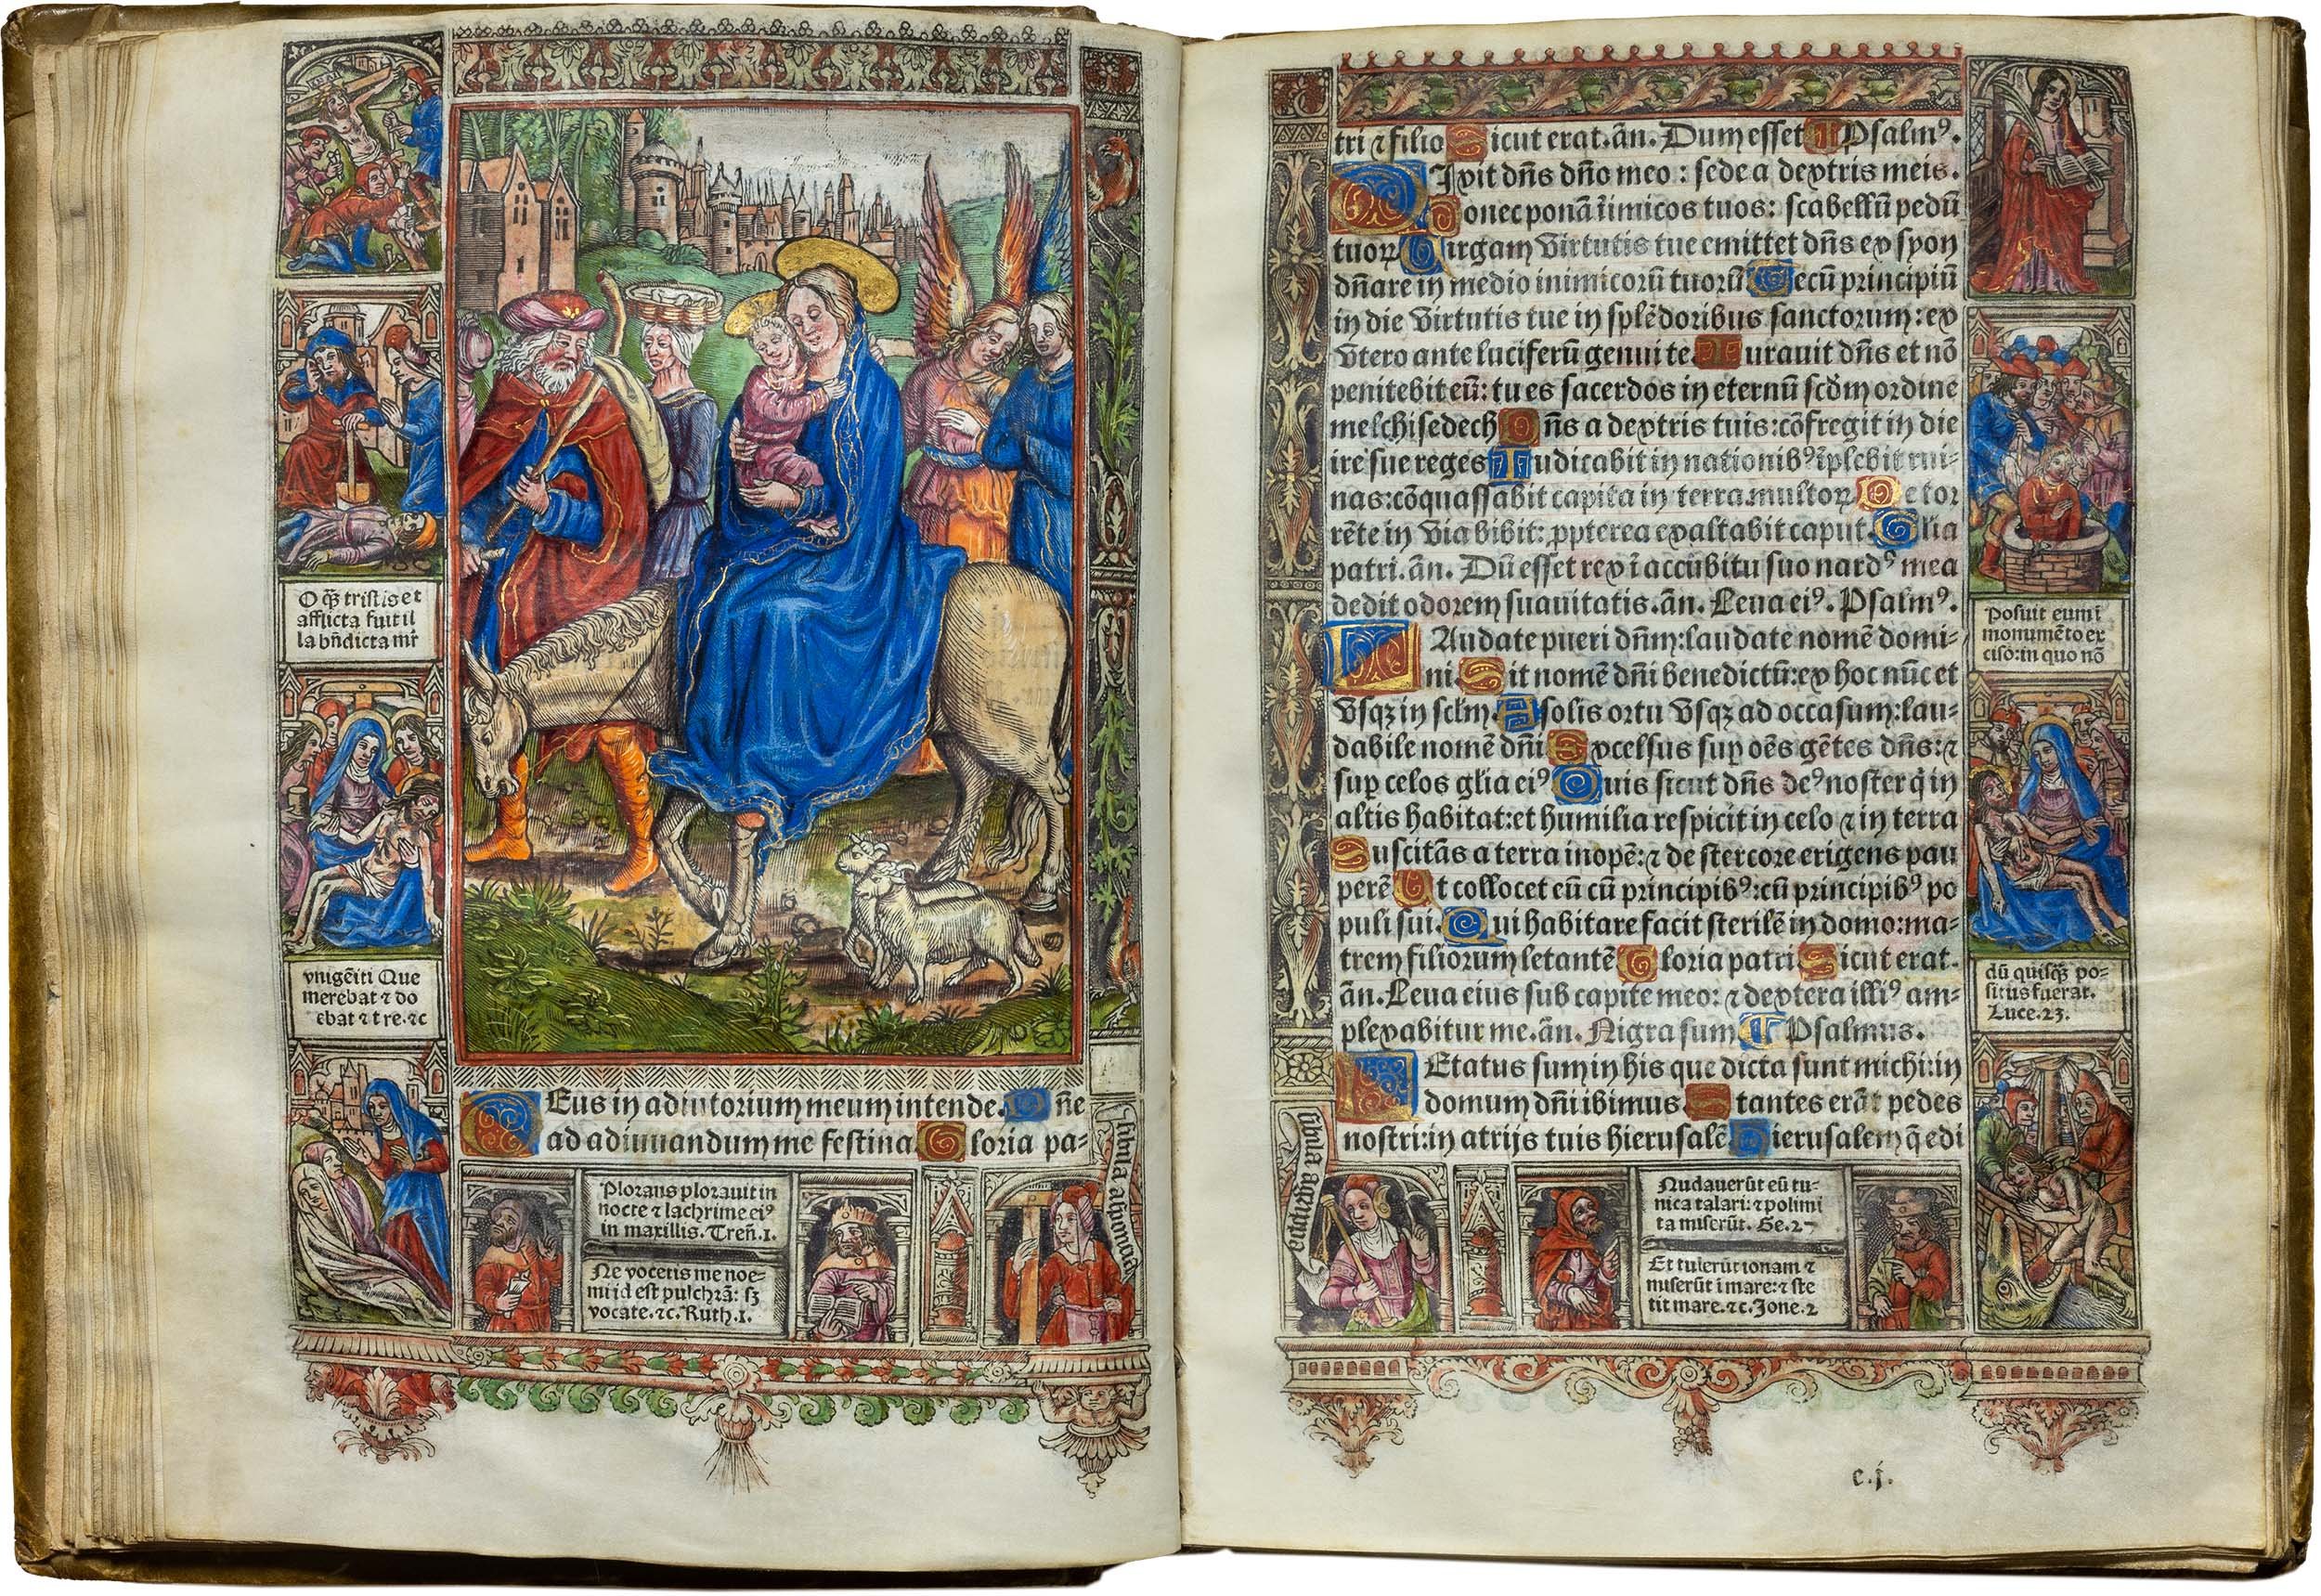 Horae-bmv-31-march-1511-kerver-printed-book-of-hours-illuminated-copy-vellum-36.jpg